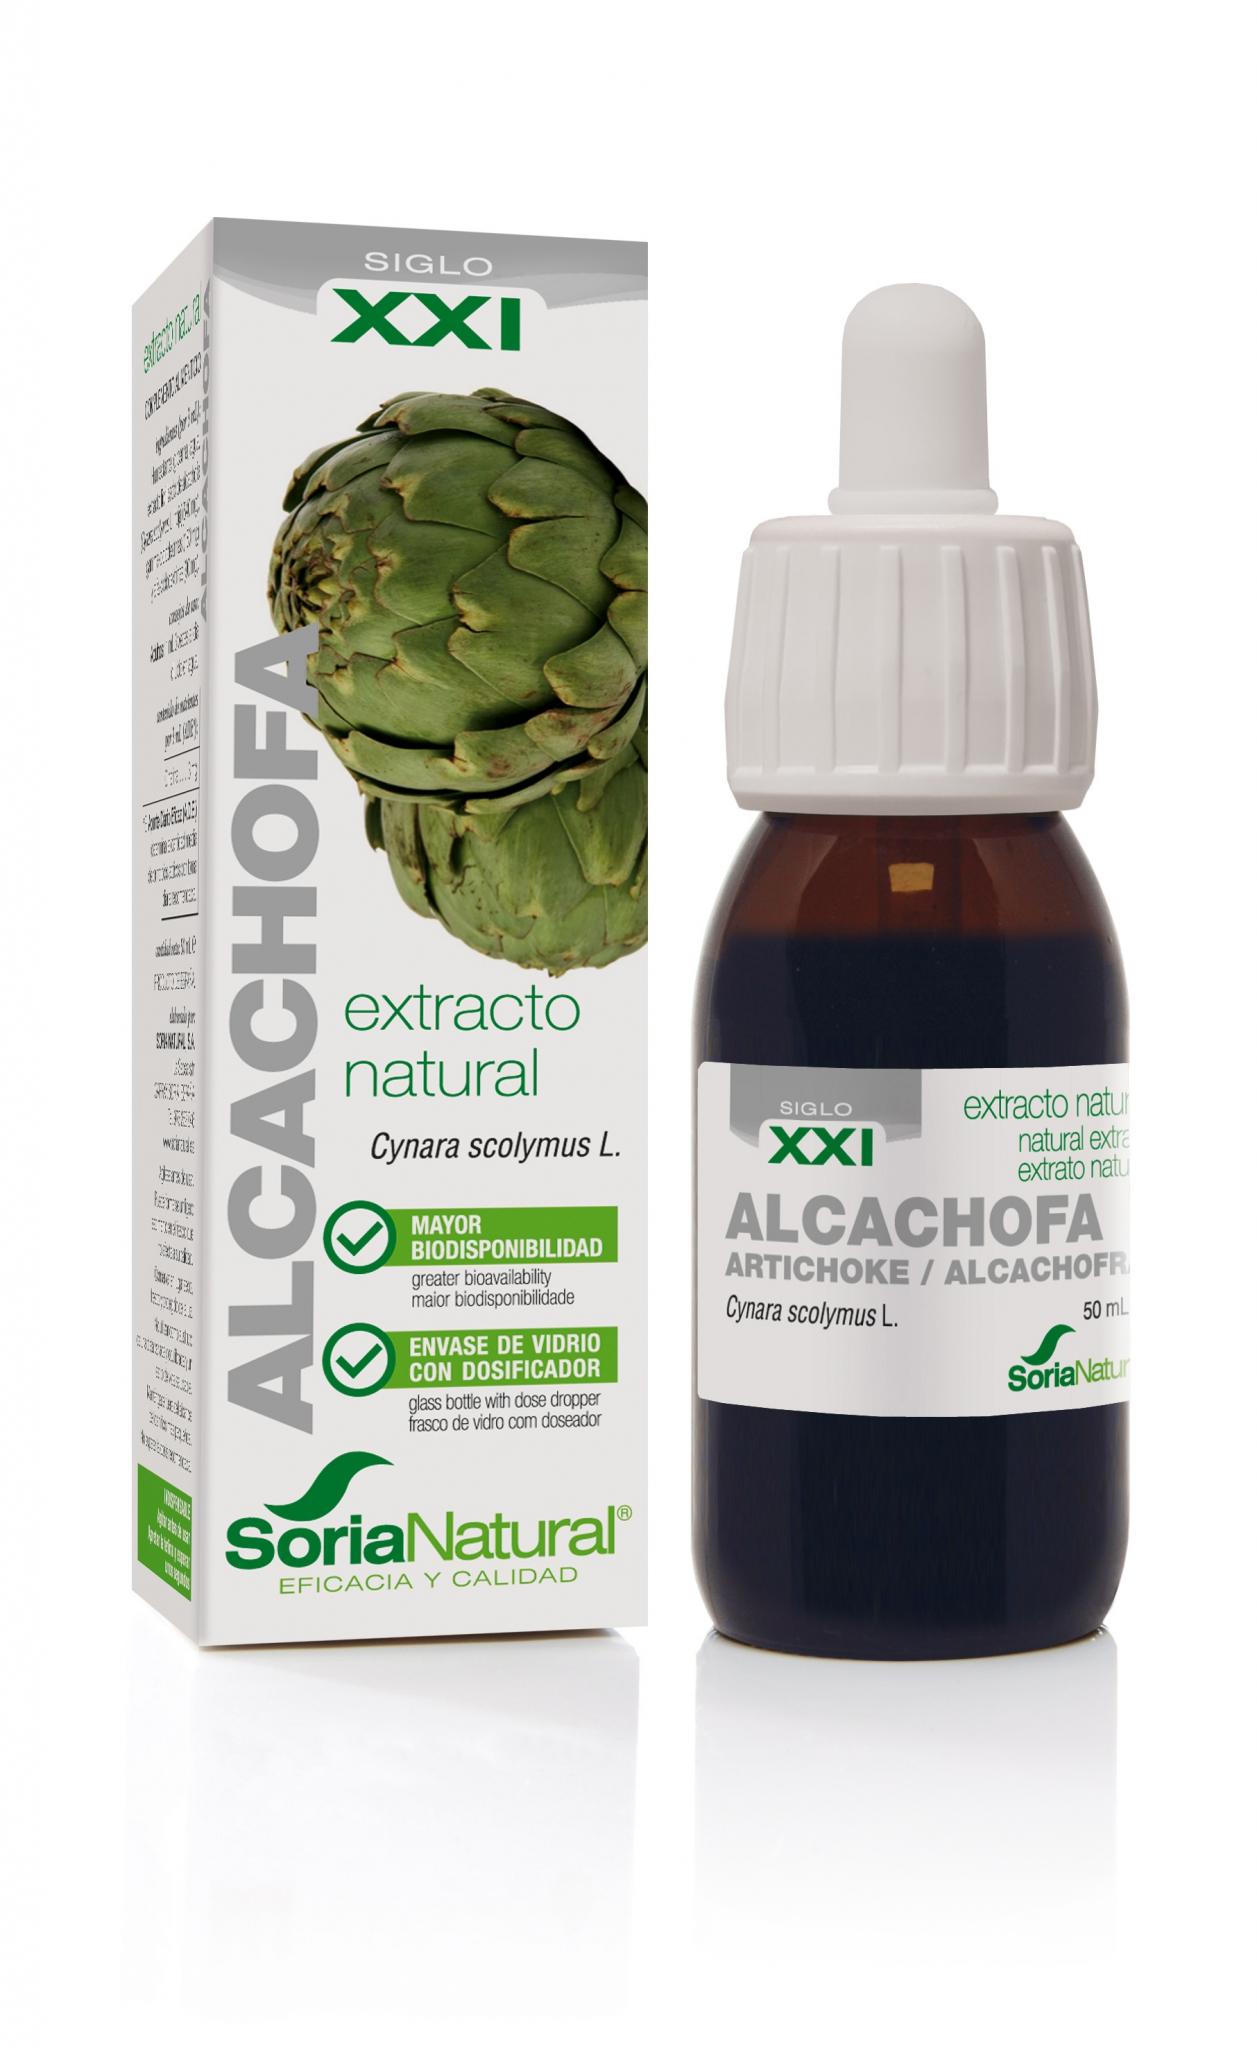 extracto-siglo-XXI-alcachofa-soria-natural-1